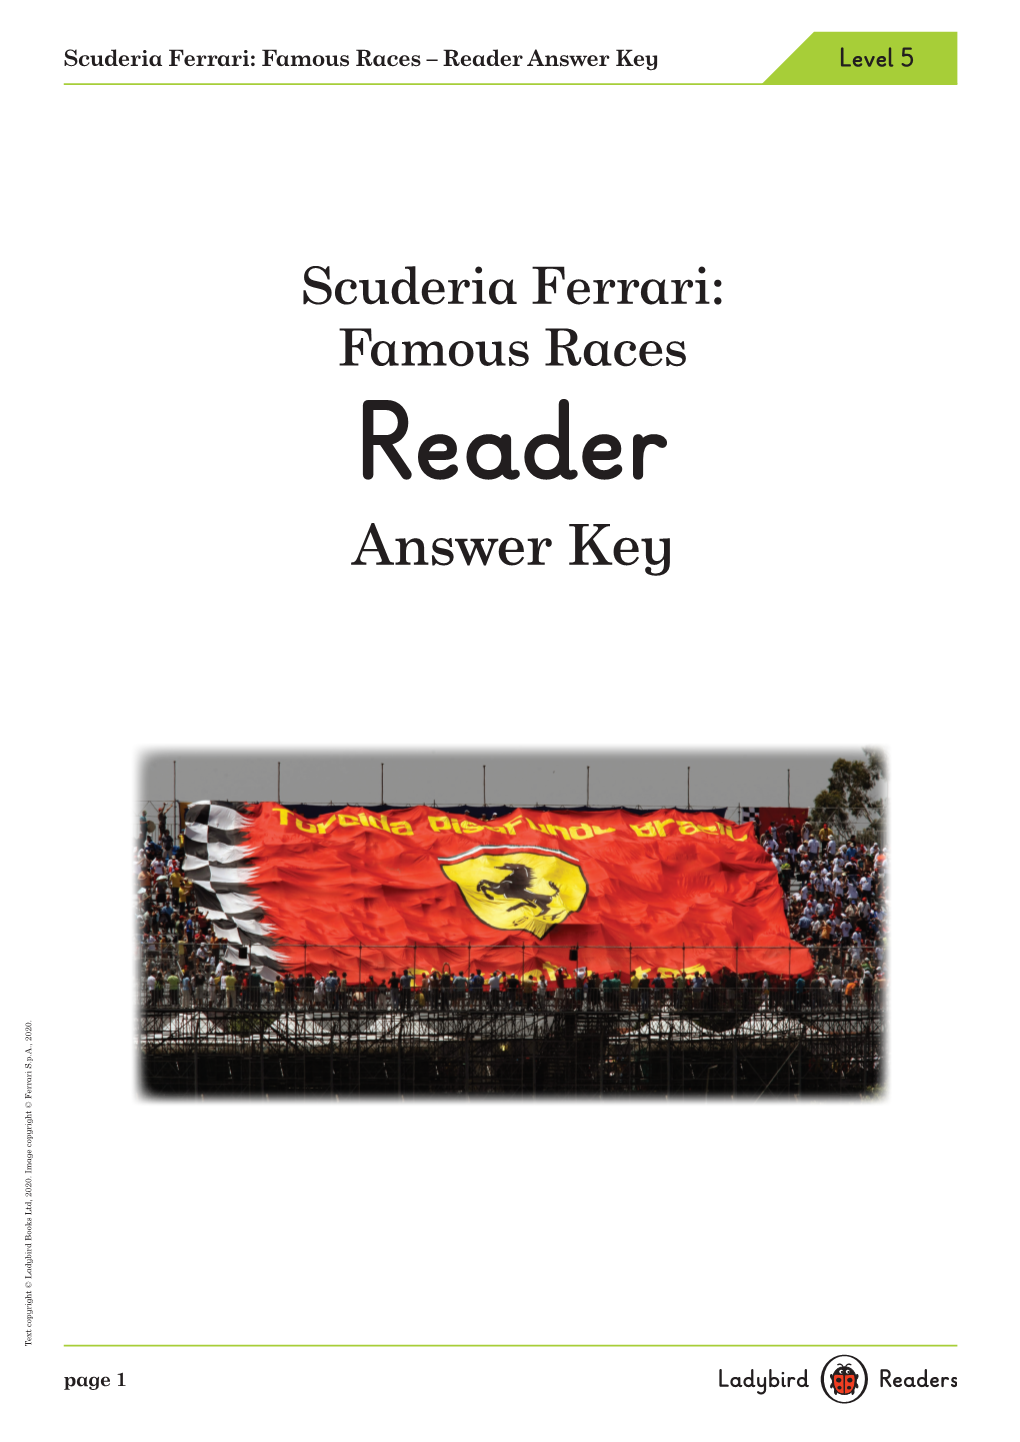 Reader Answer Key Level 5